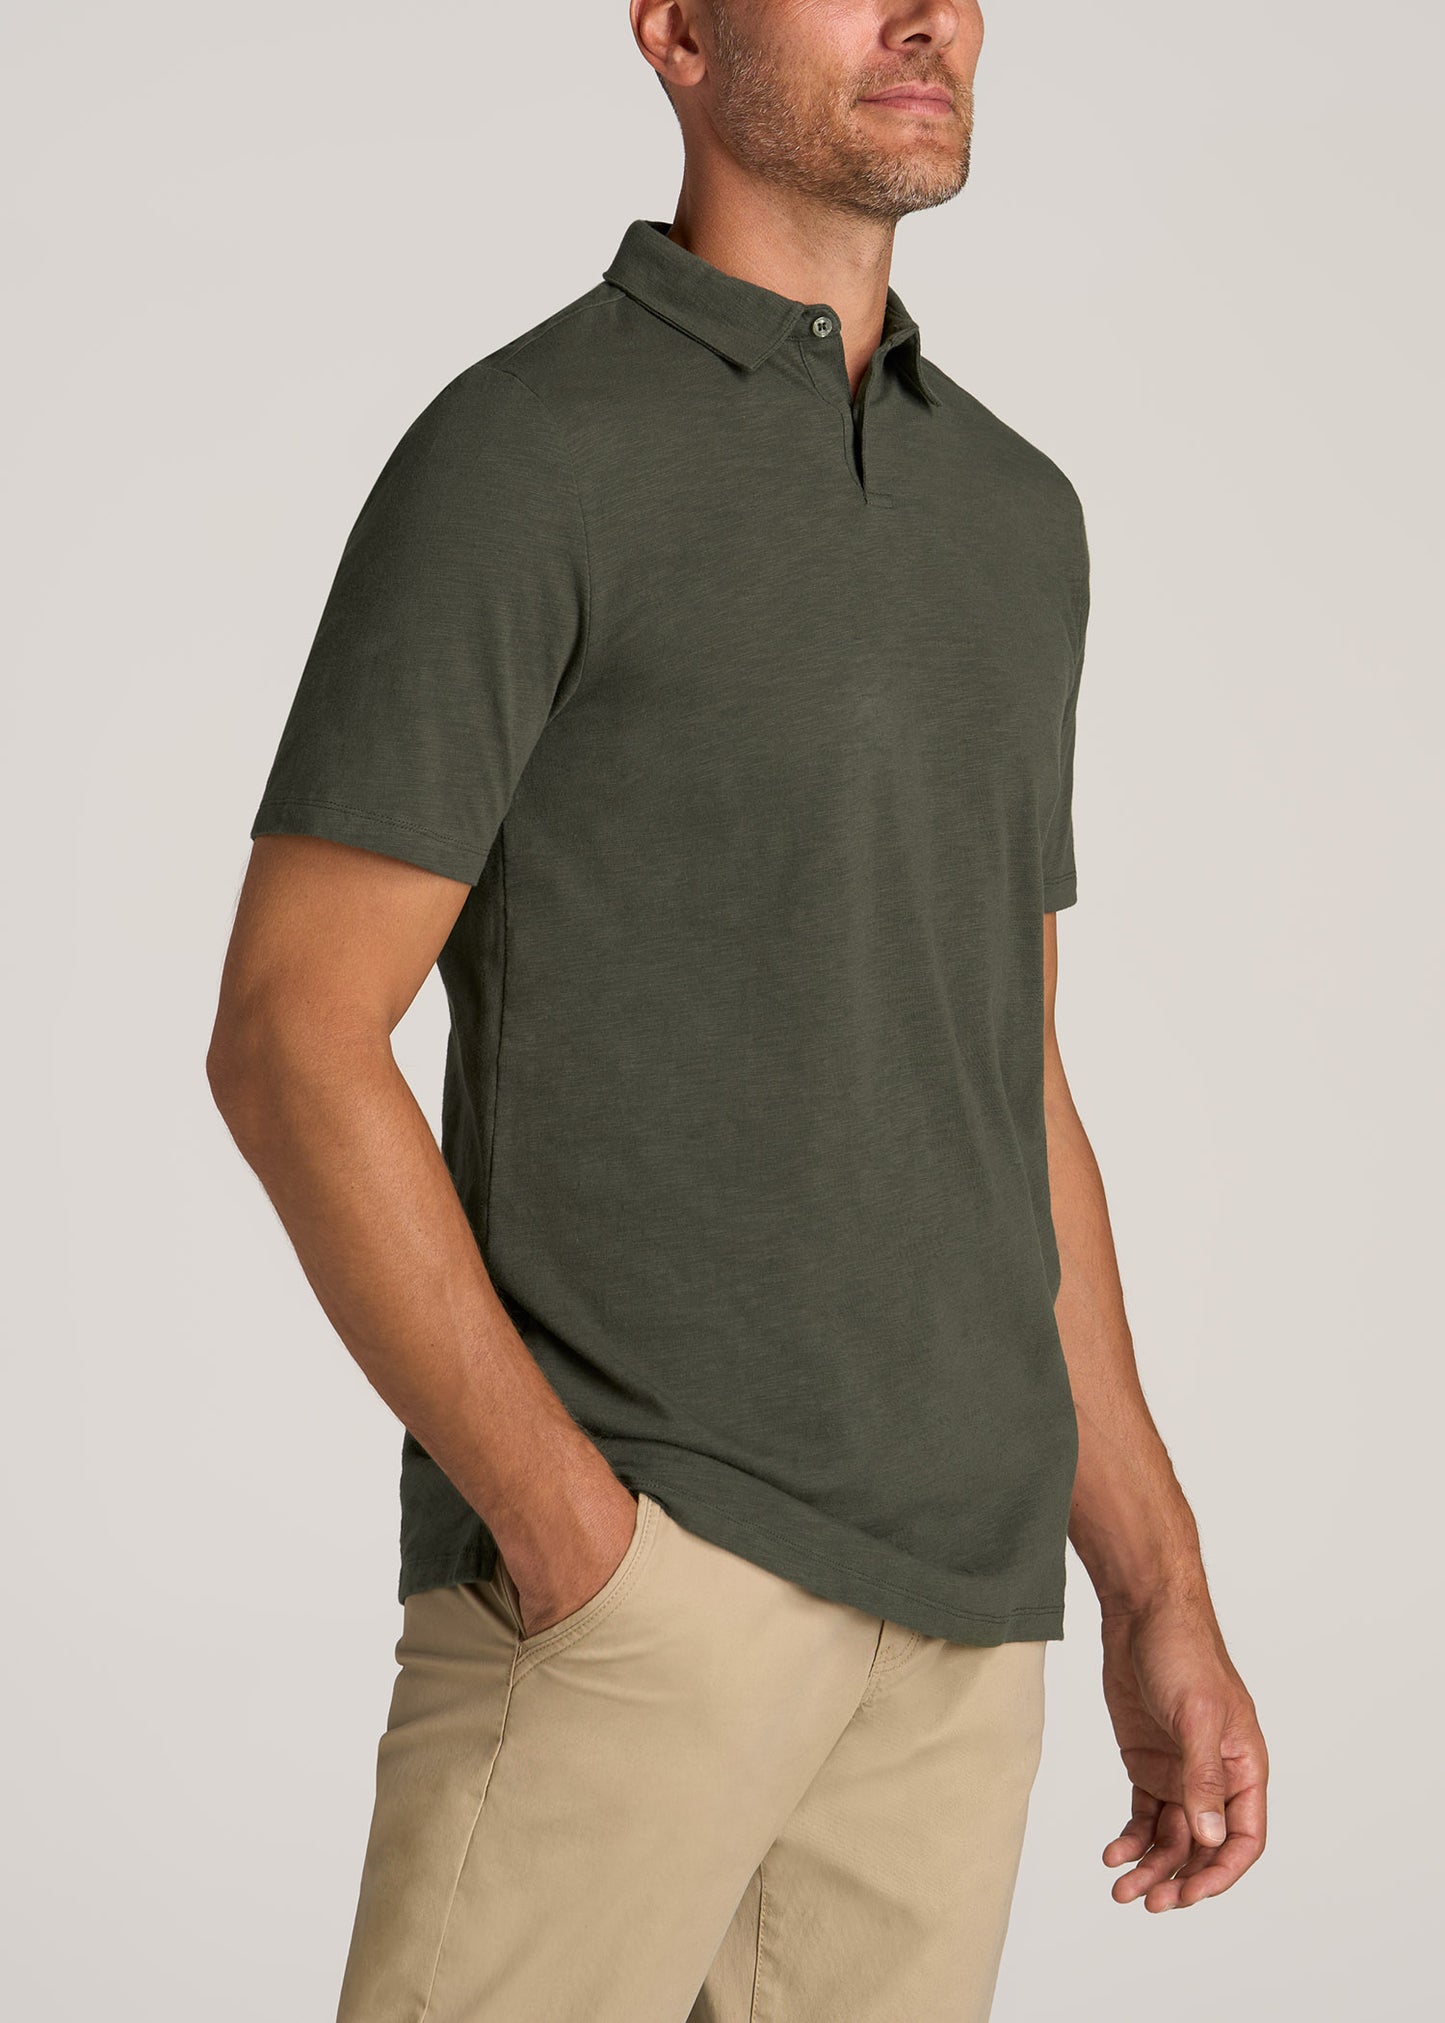 American Tall Polo Tall Slub | Self Collar Shirt